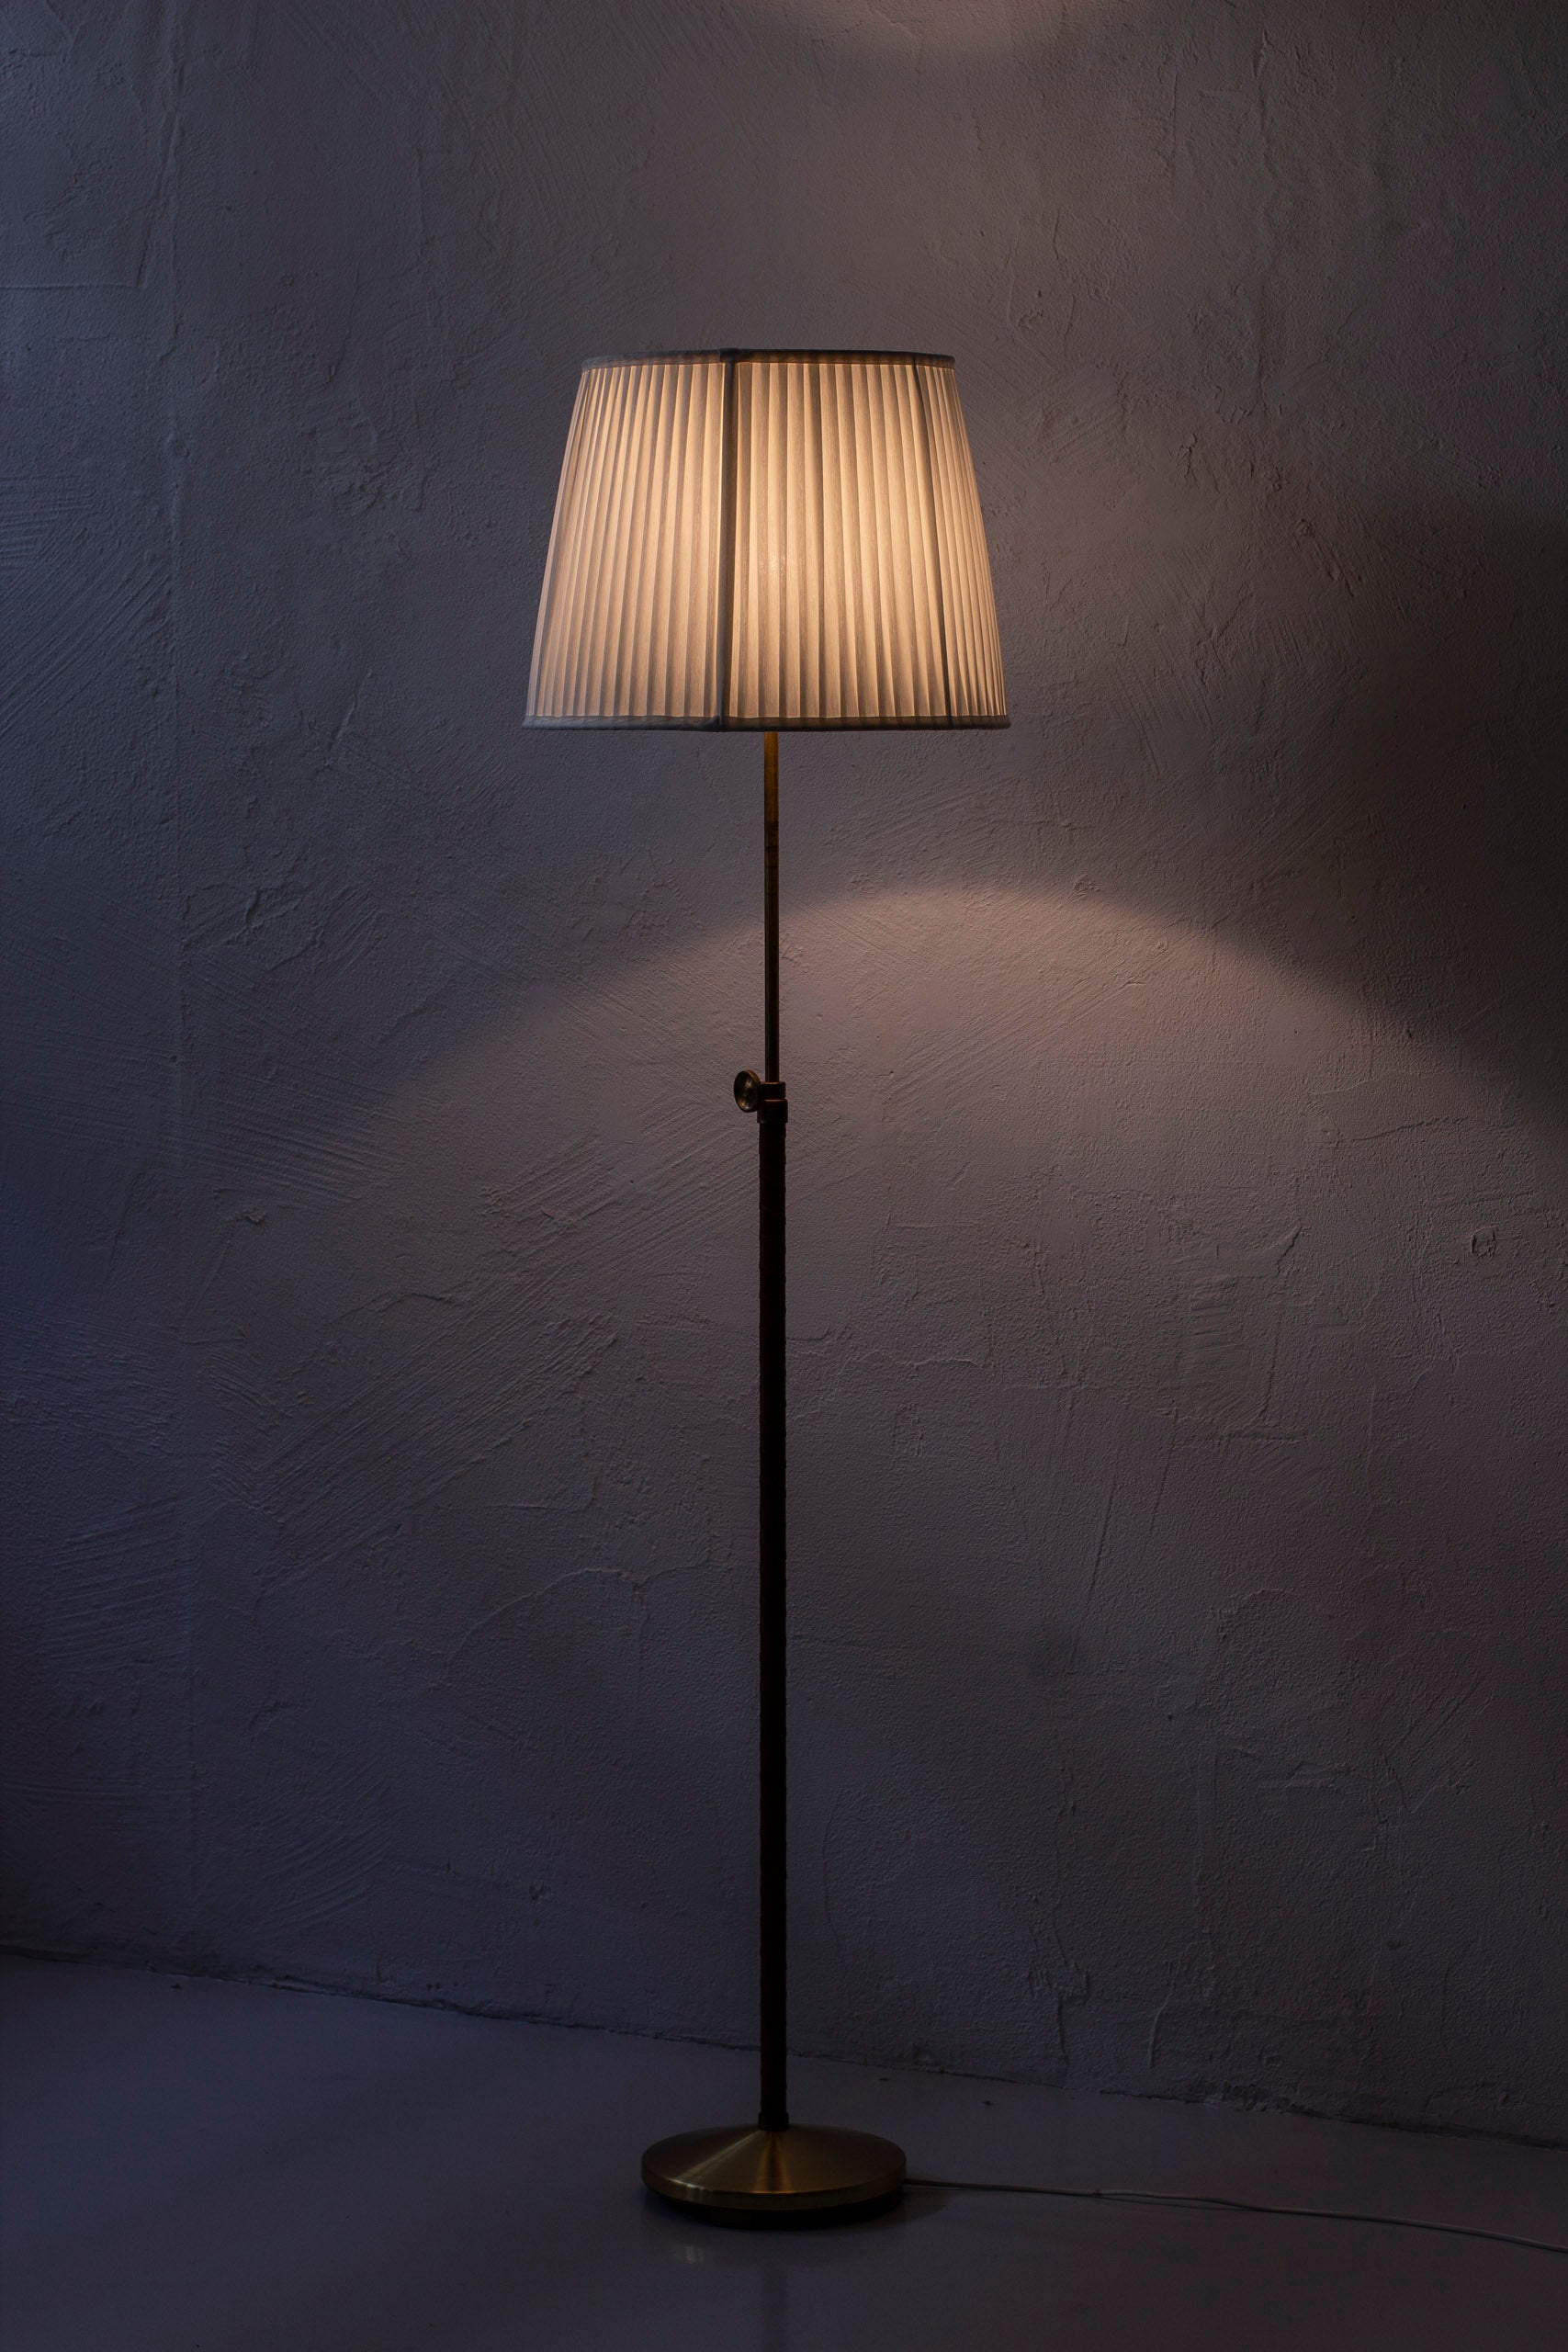 1950s floor lamp by ASEA